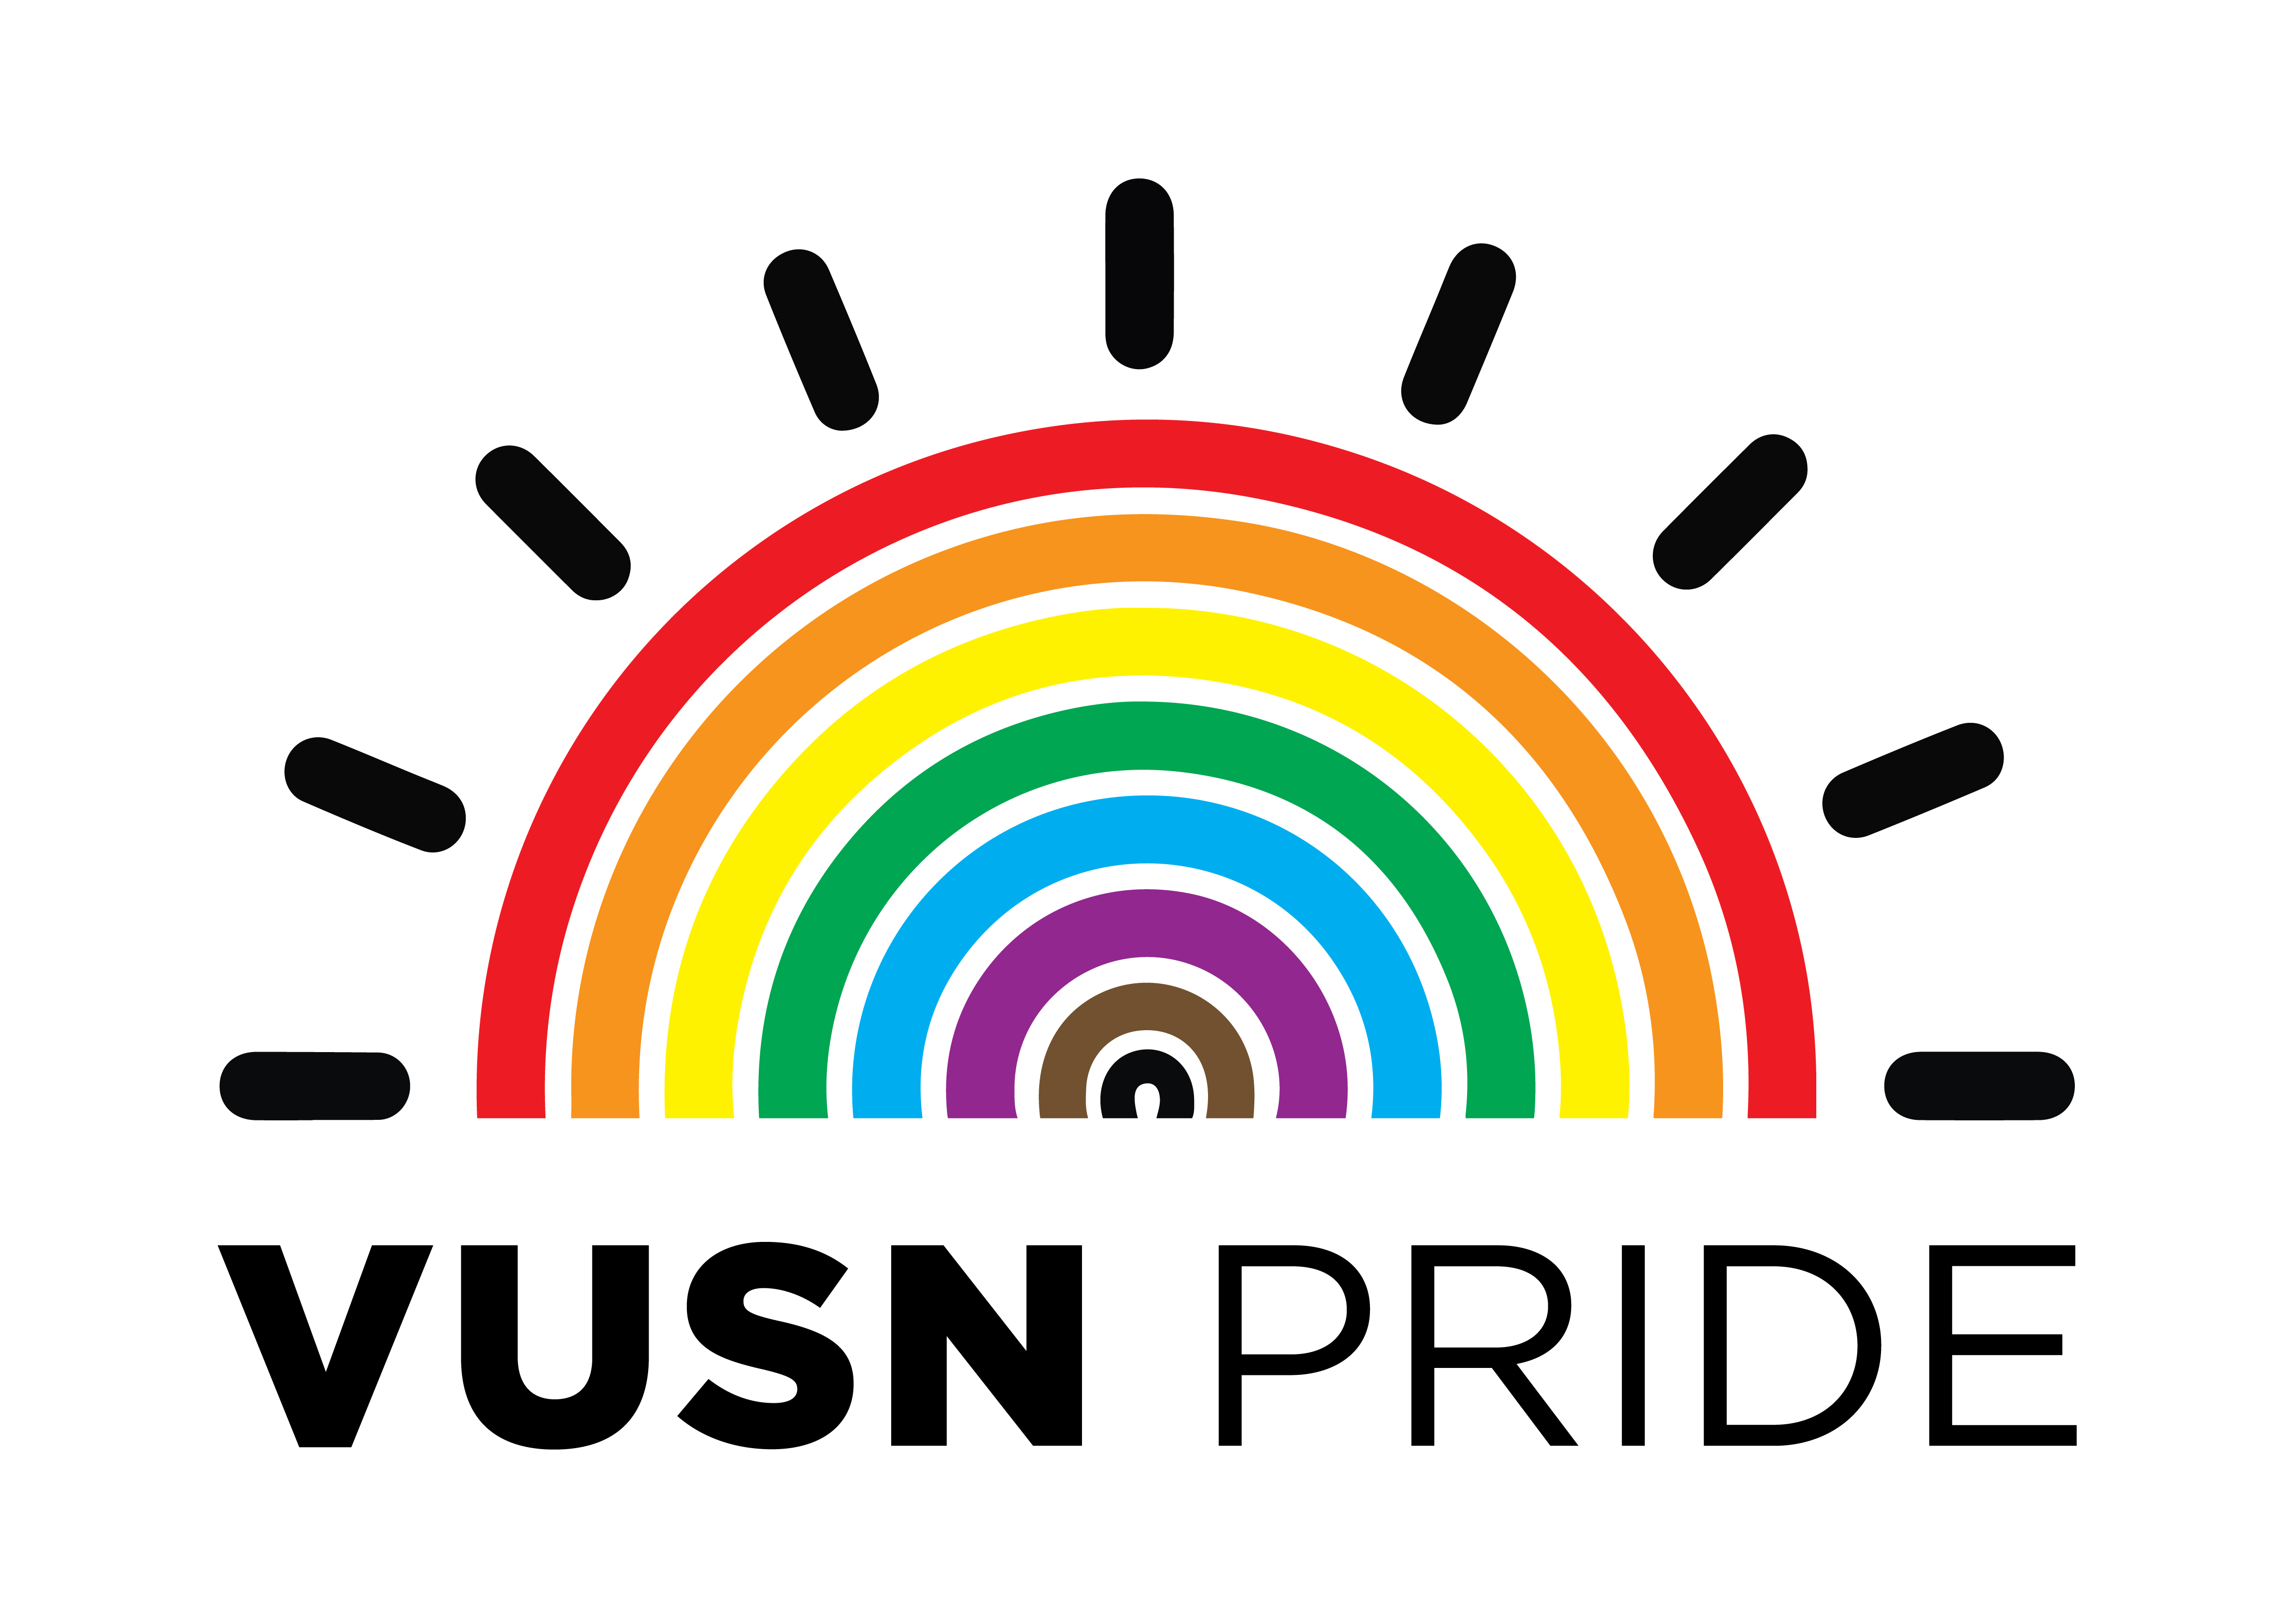 VUSNPride logo